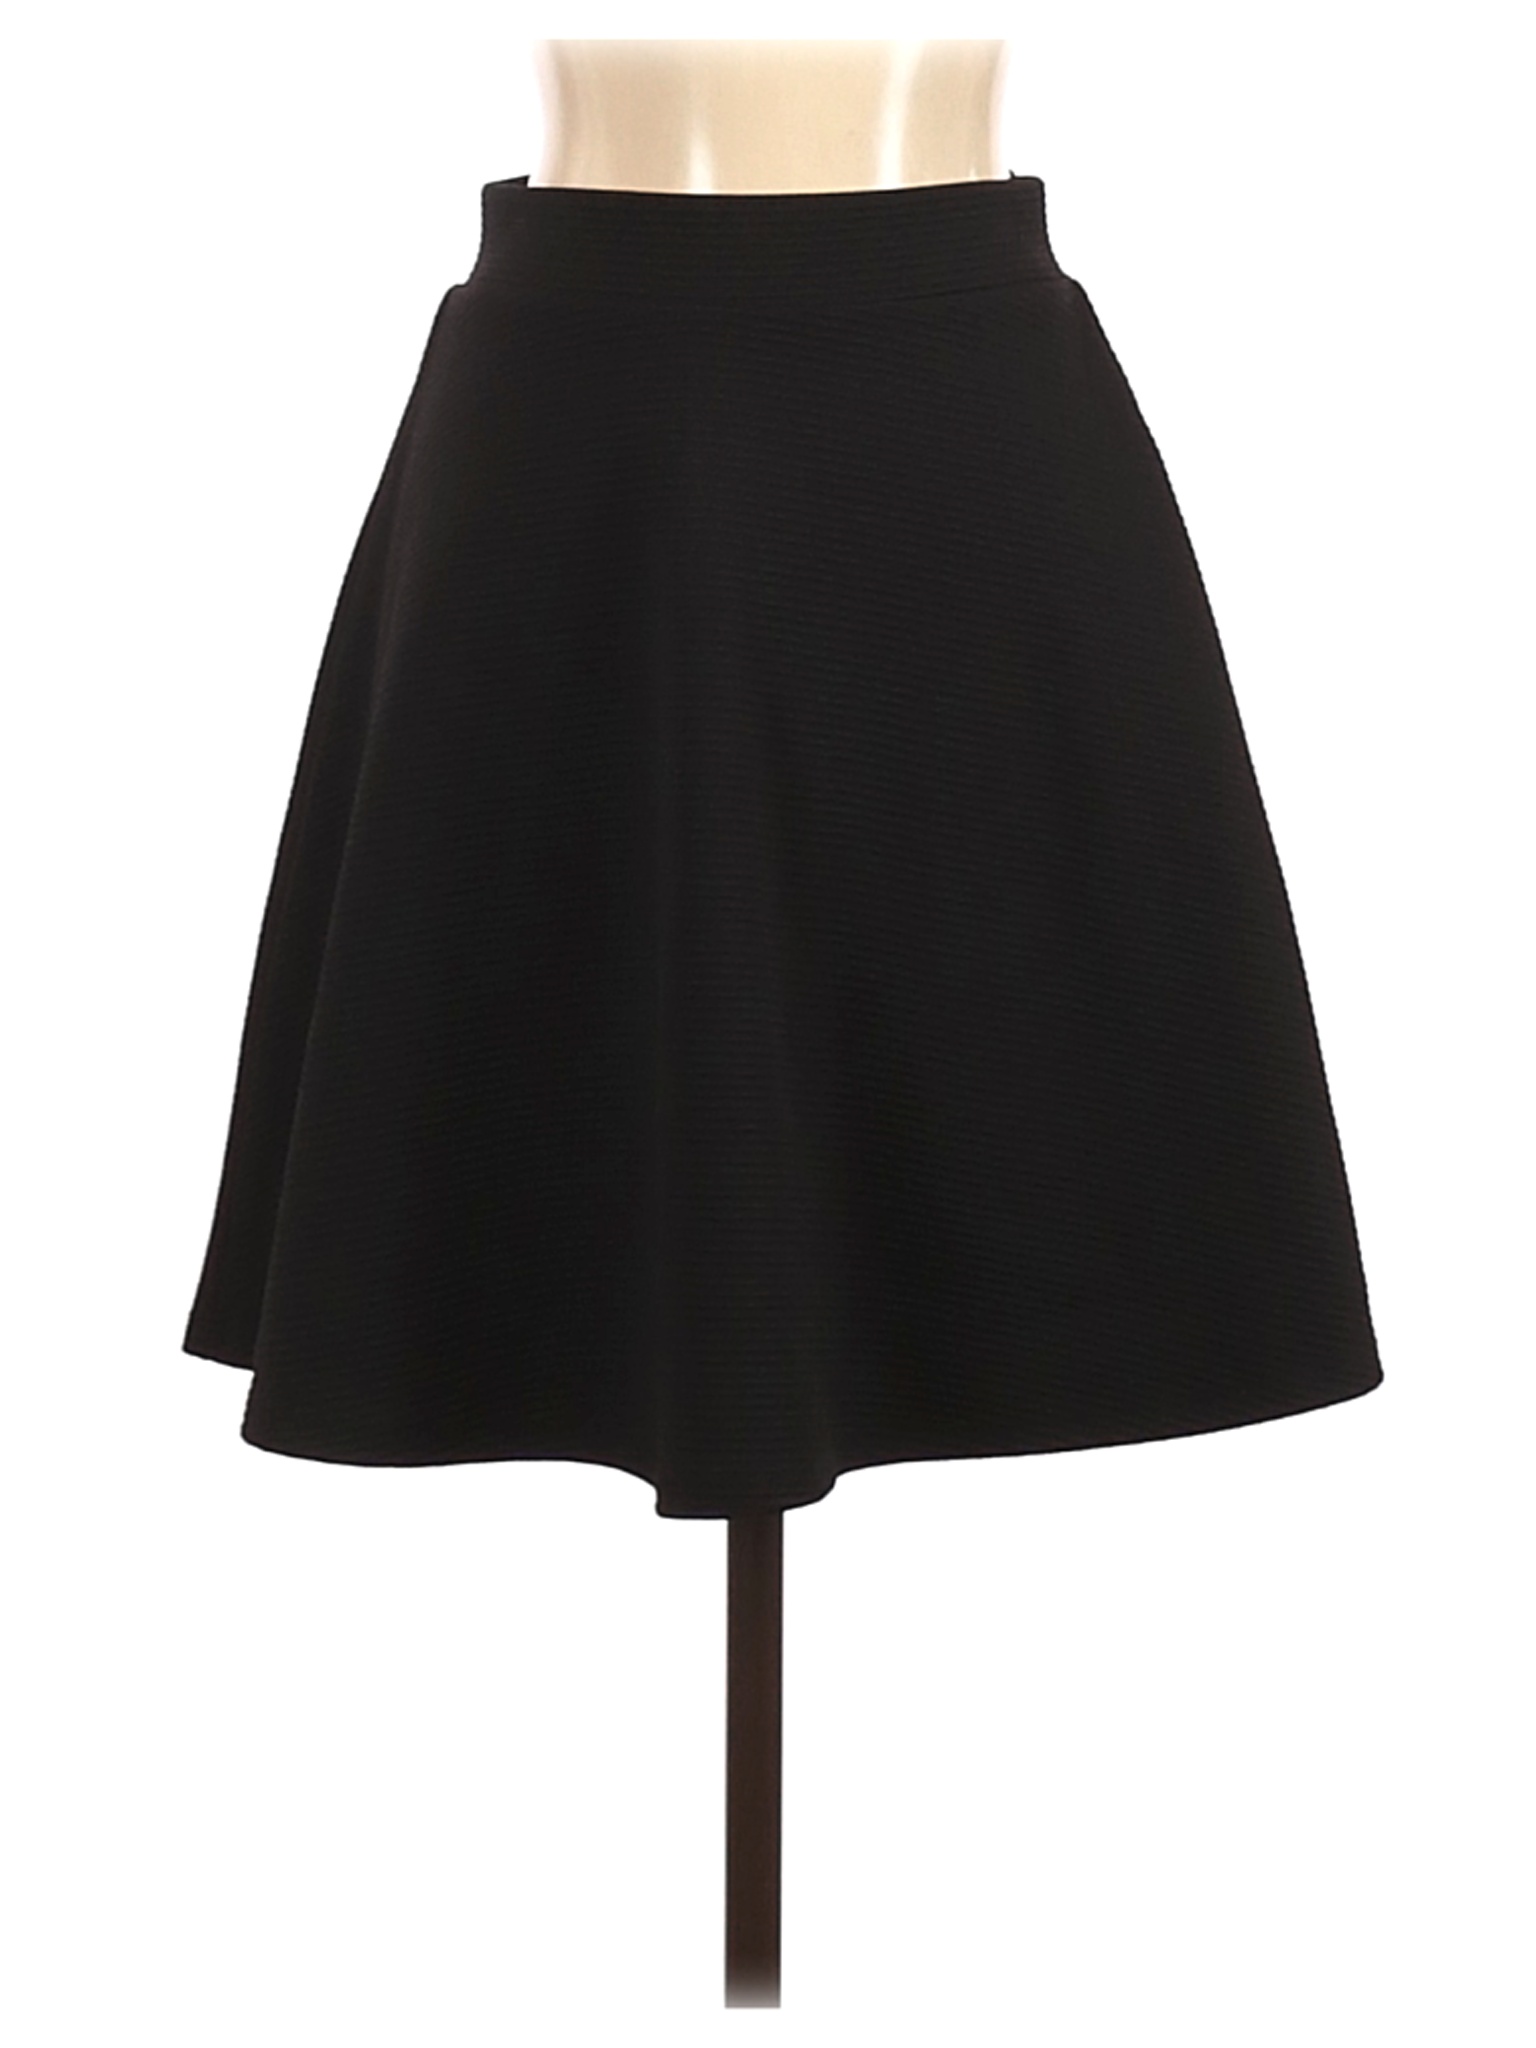 H&M Women Black Casual Skirt XS | eBay